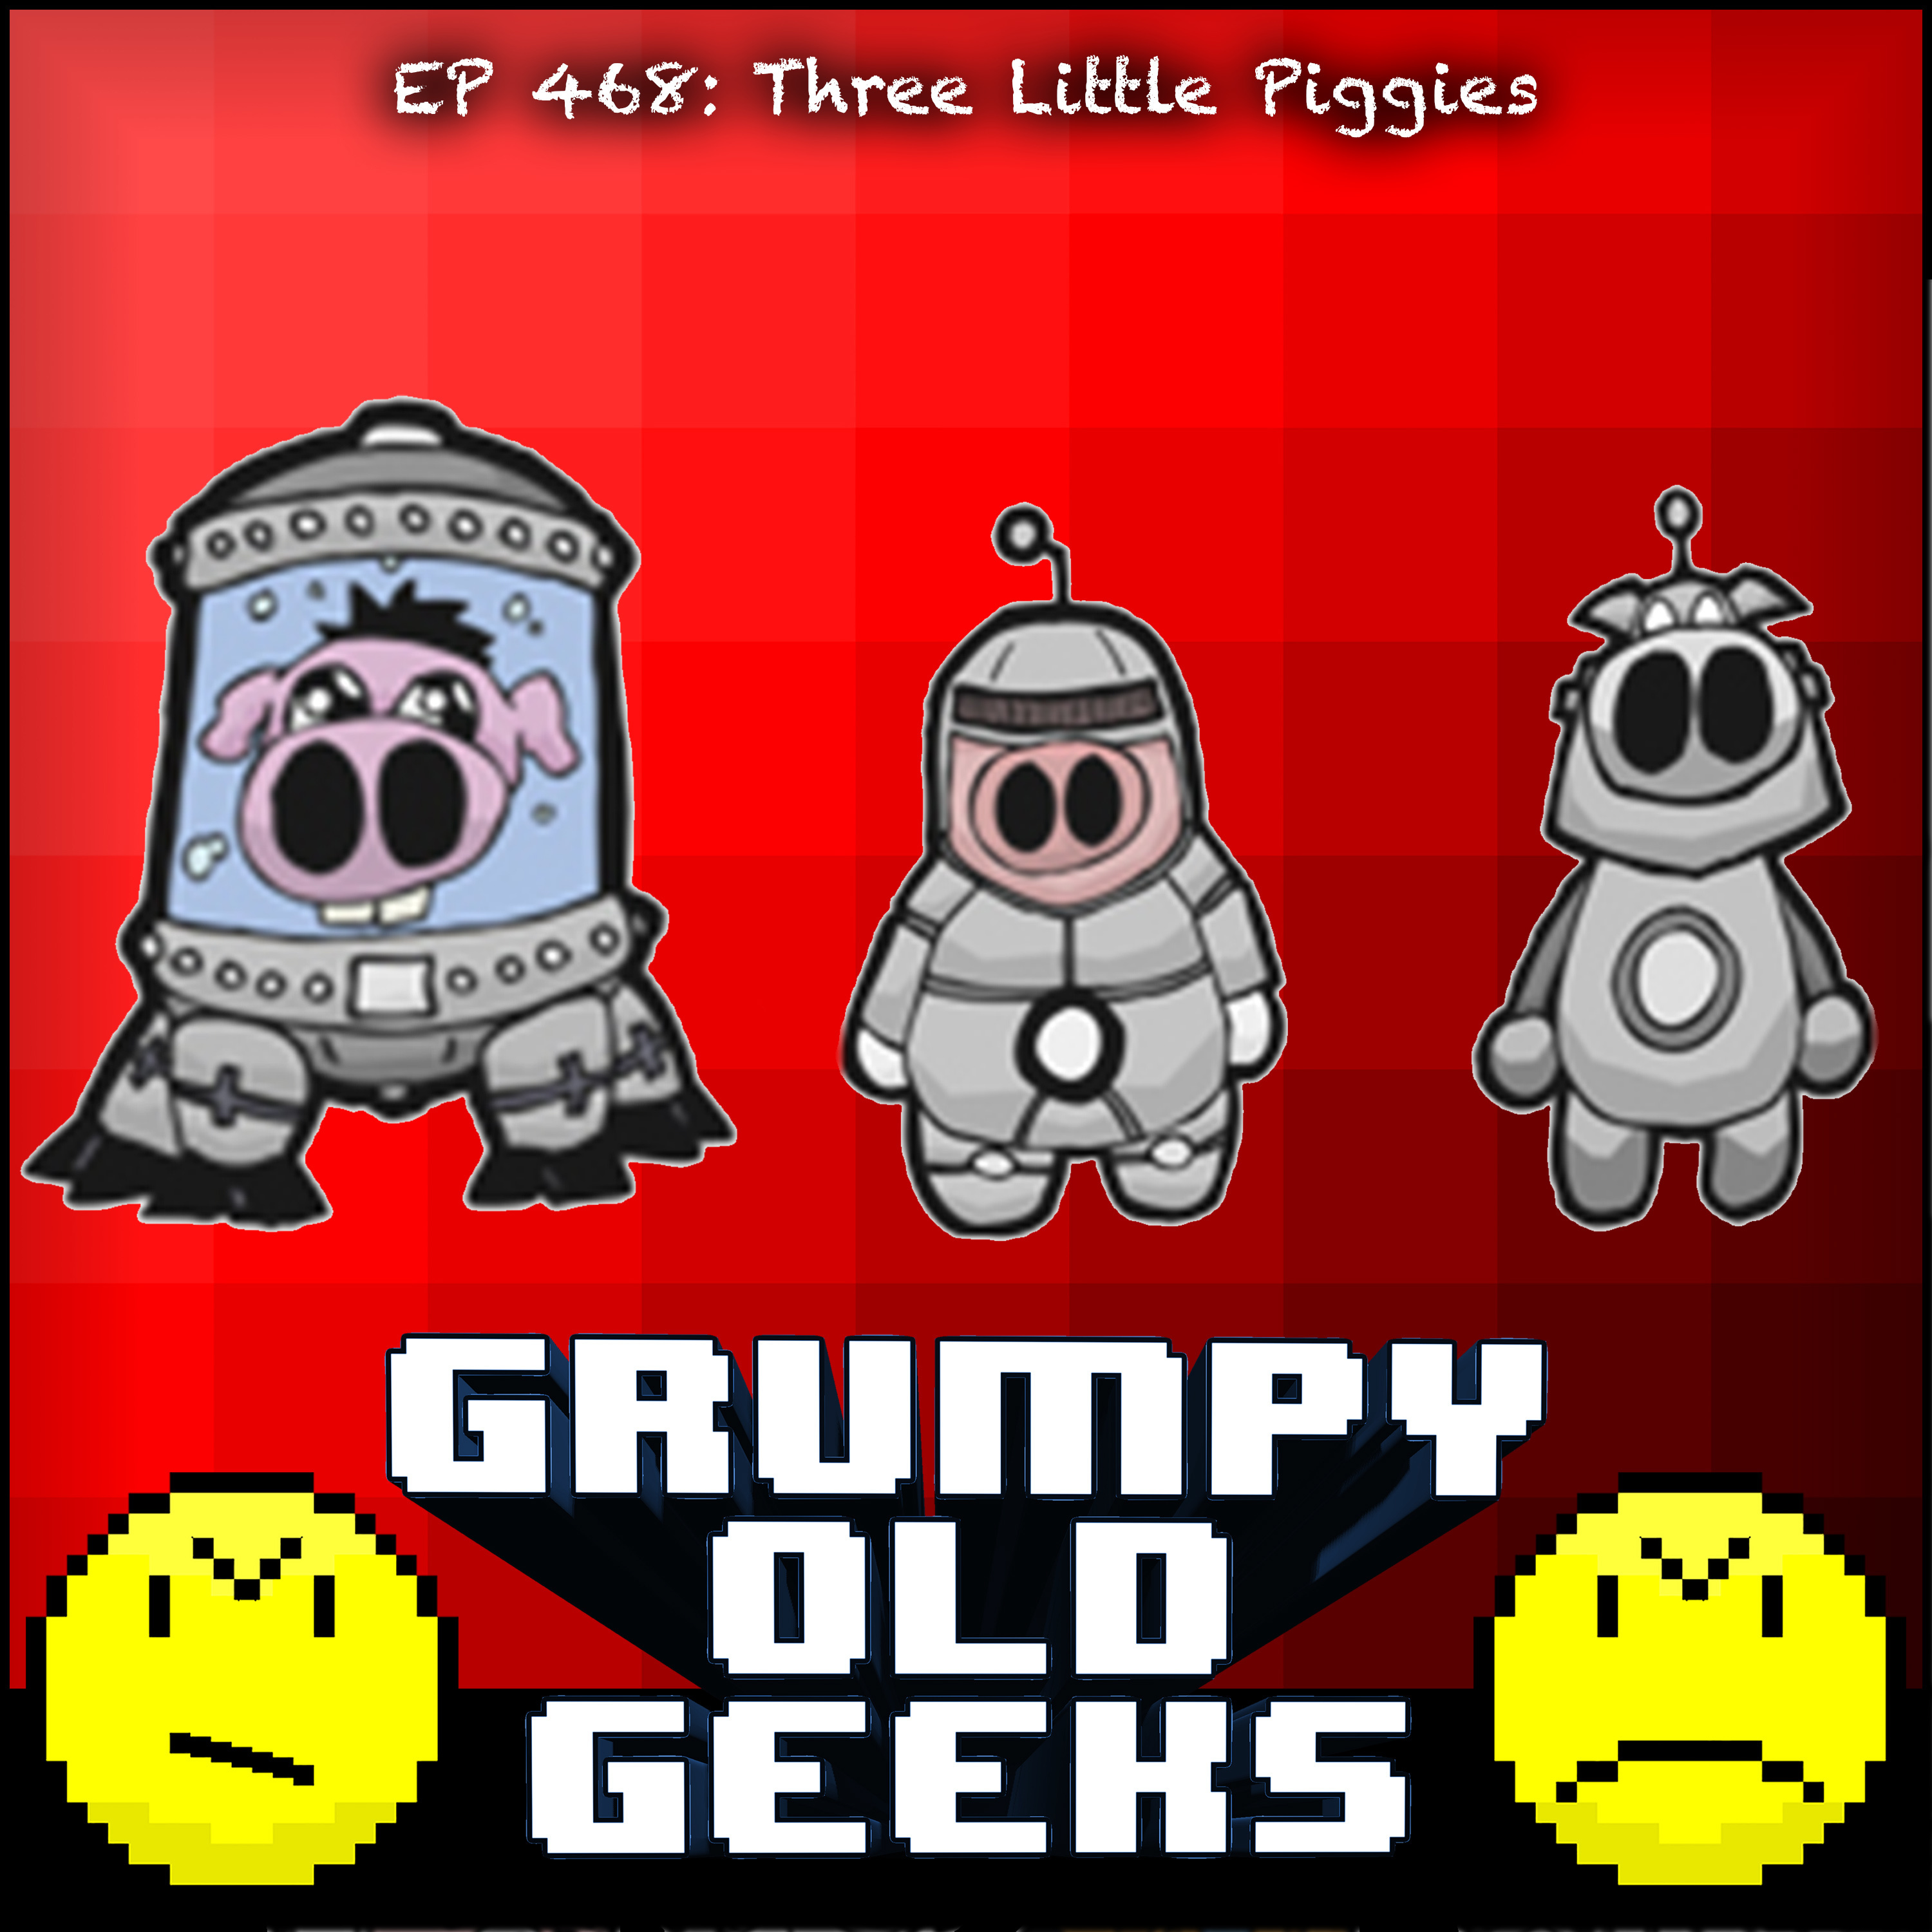 468: Three Little Piggies Image